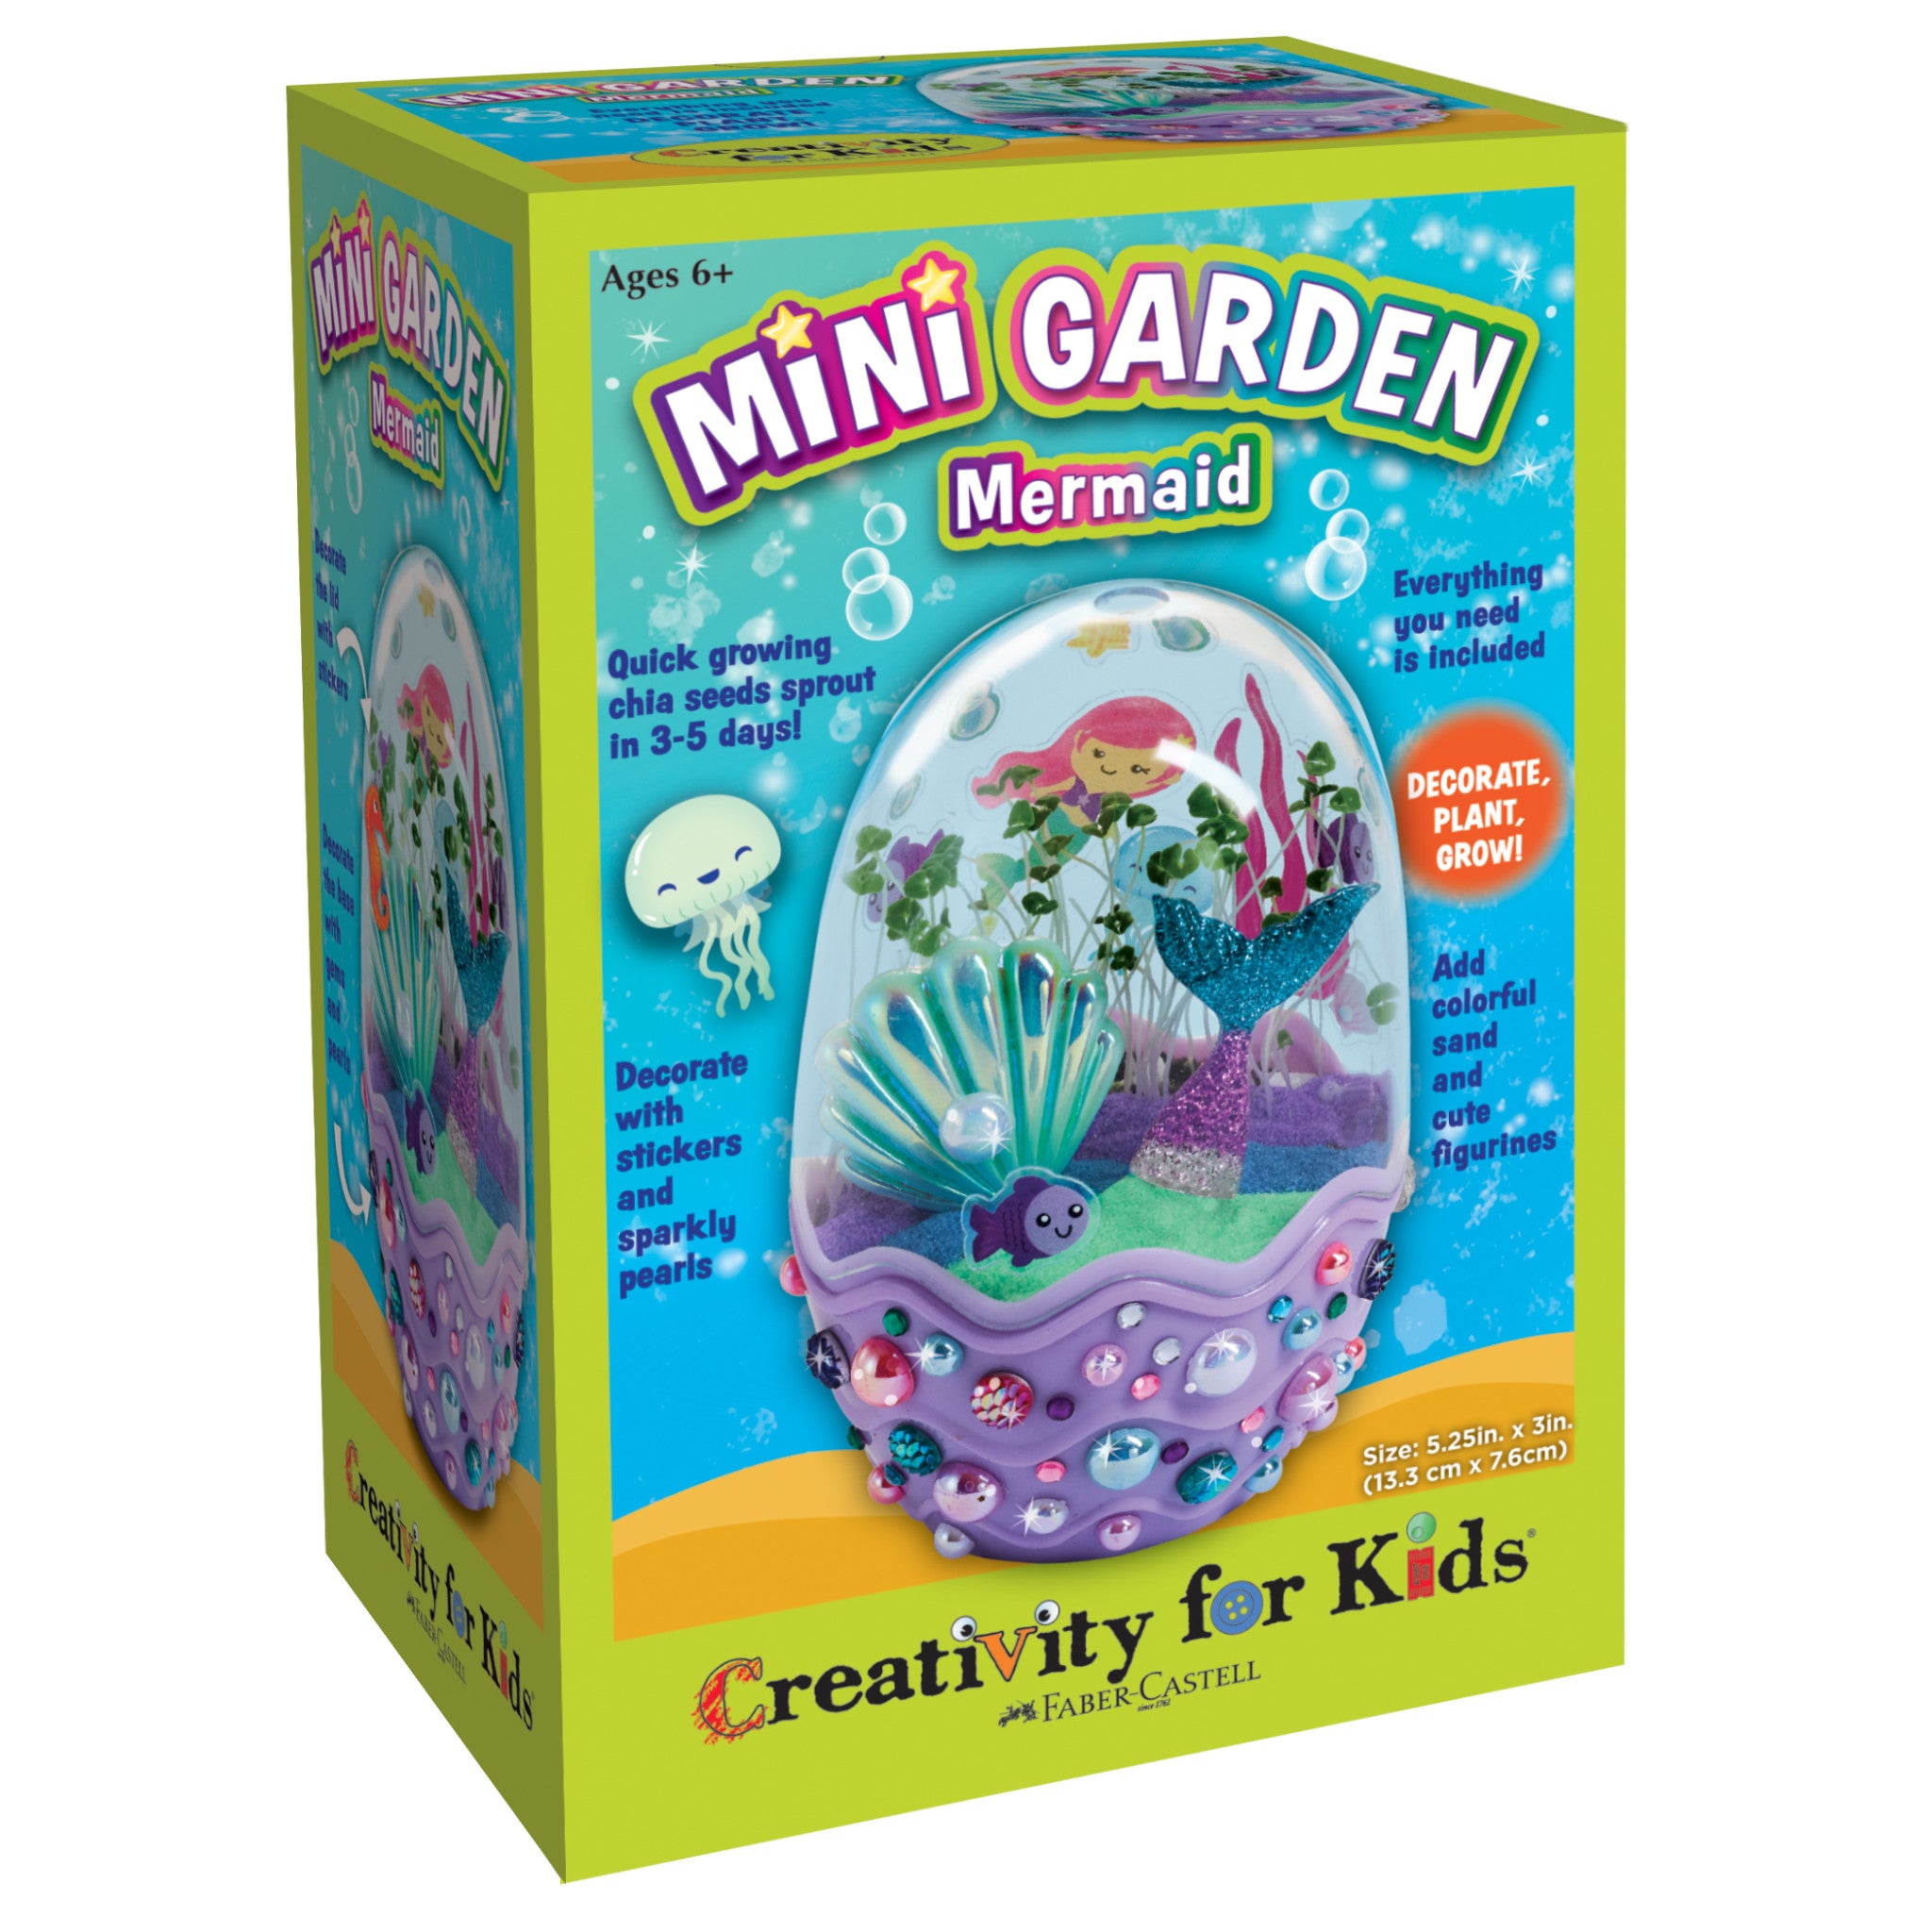 Creativity for Kids Dinosaur Mini Garden